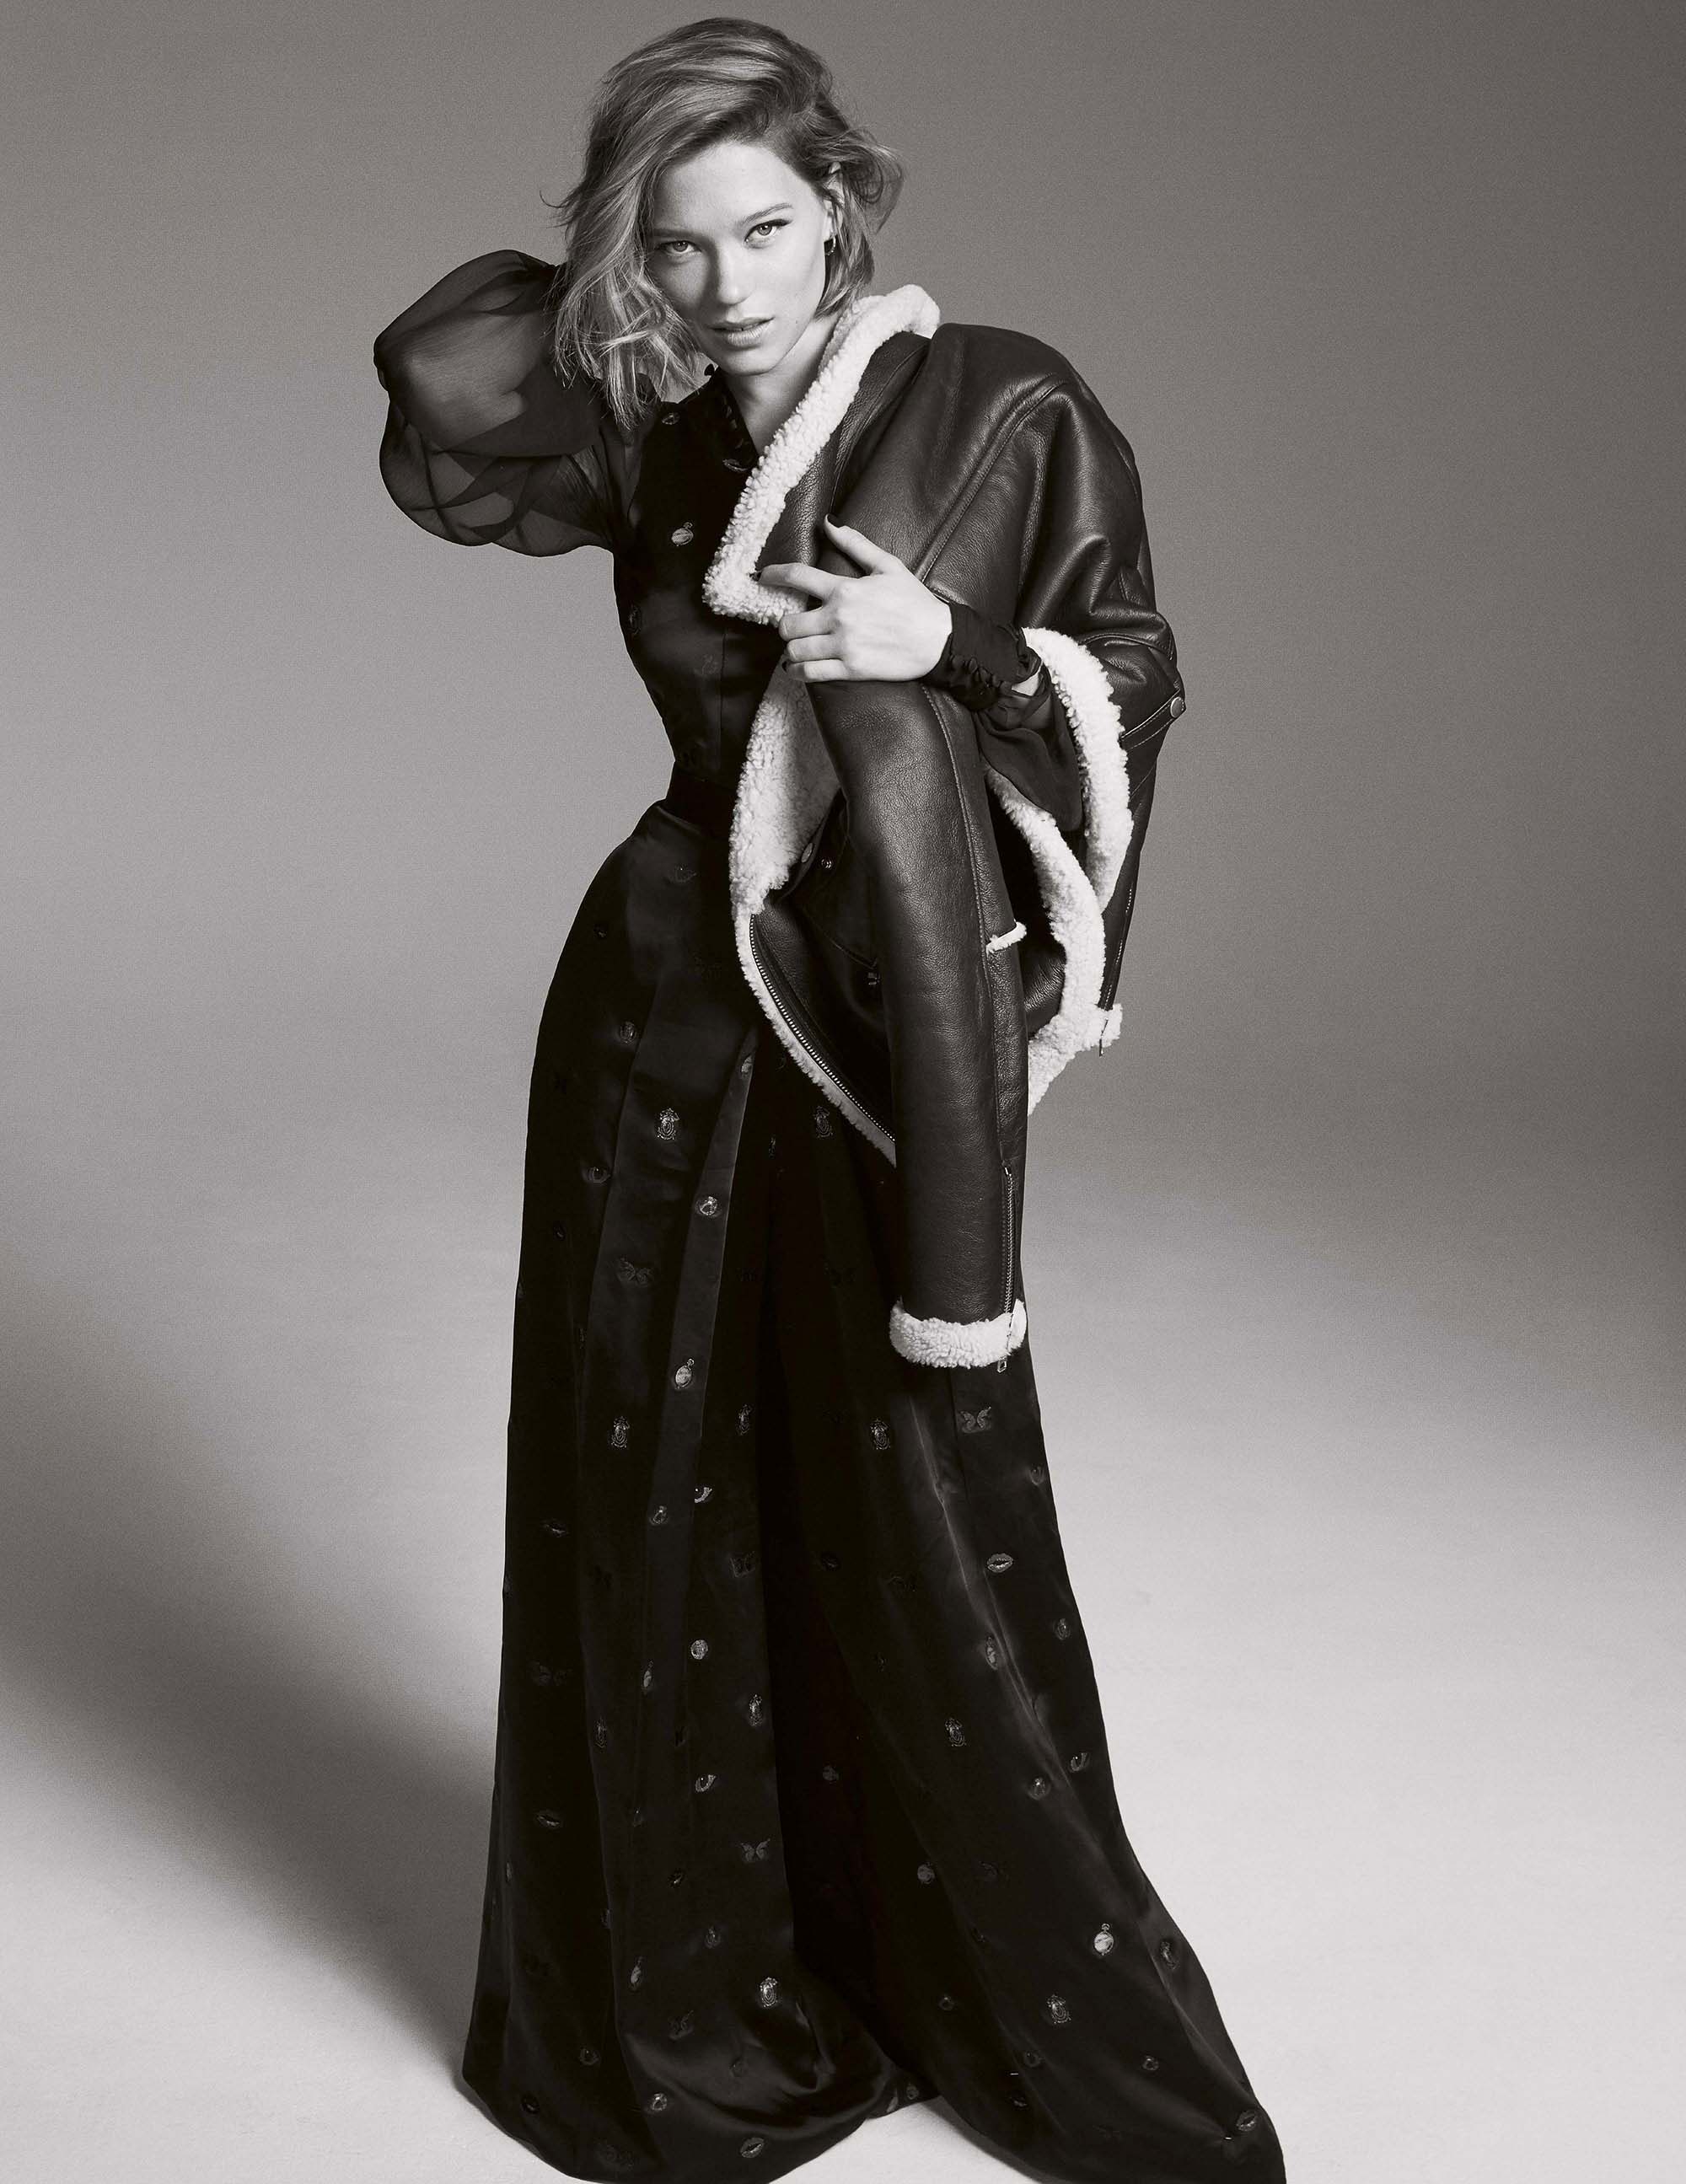 Lea Seydoux by Kai Z Feng for British Elle June 2016 - Fashion